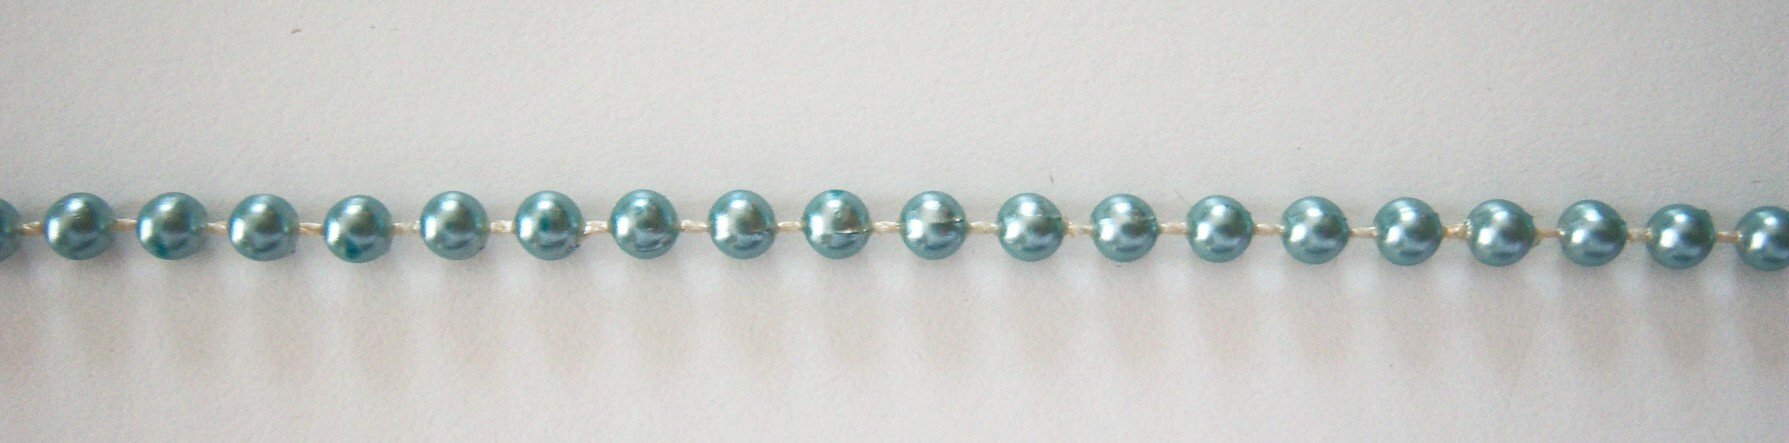 Antique Blue 4mm Imitation Pearls